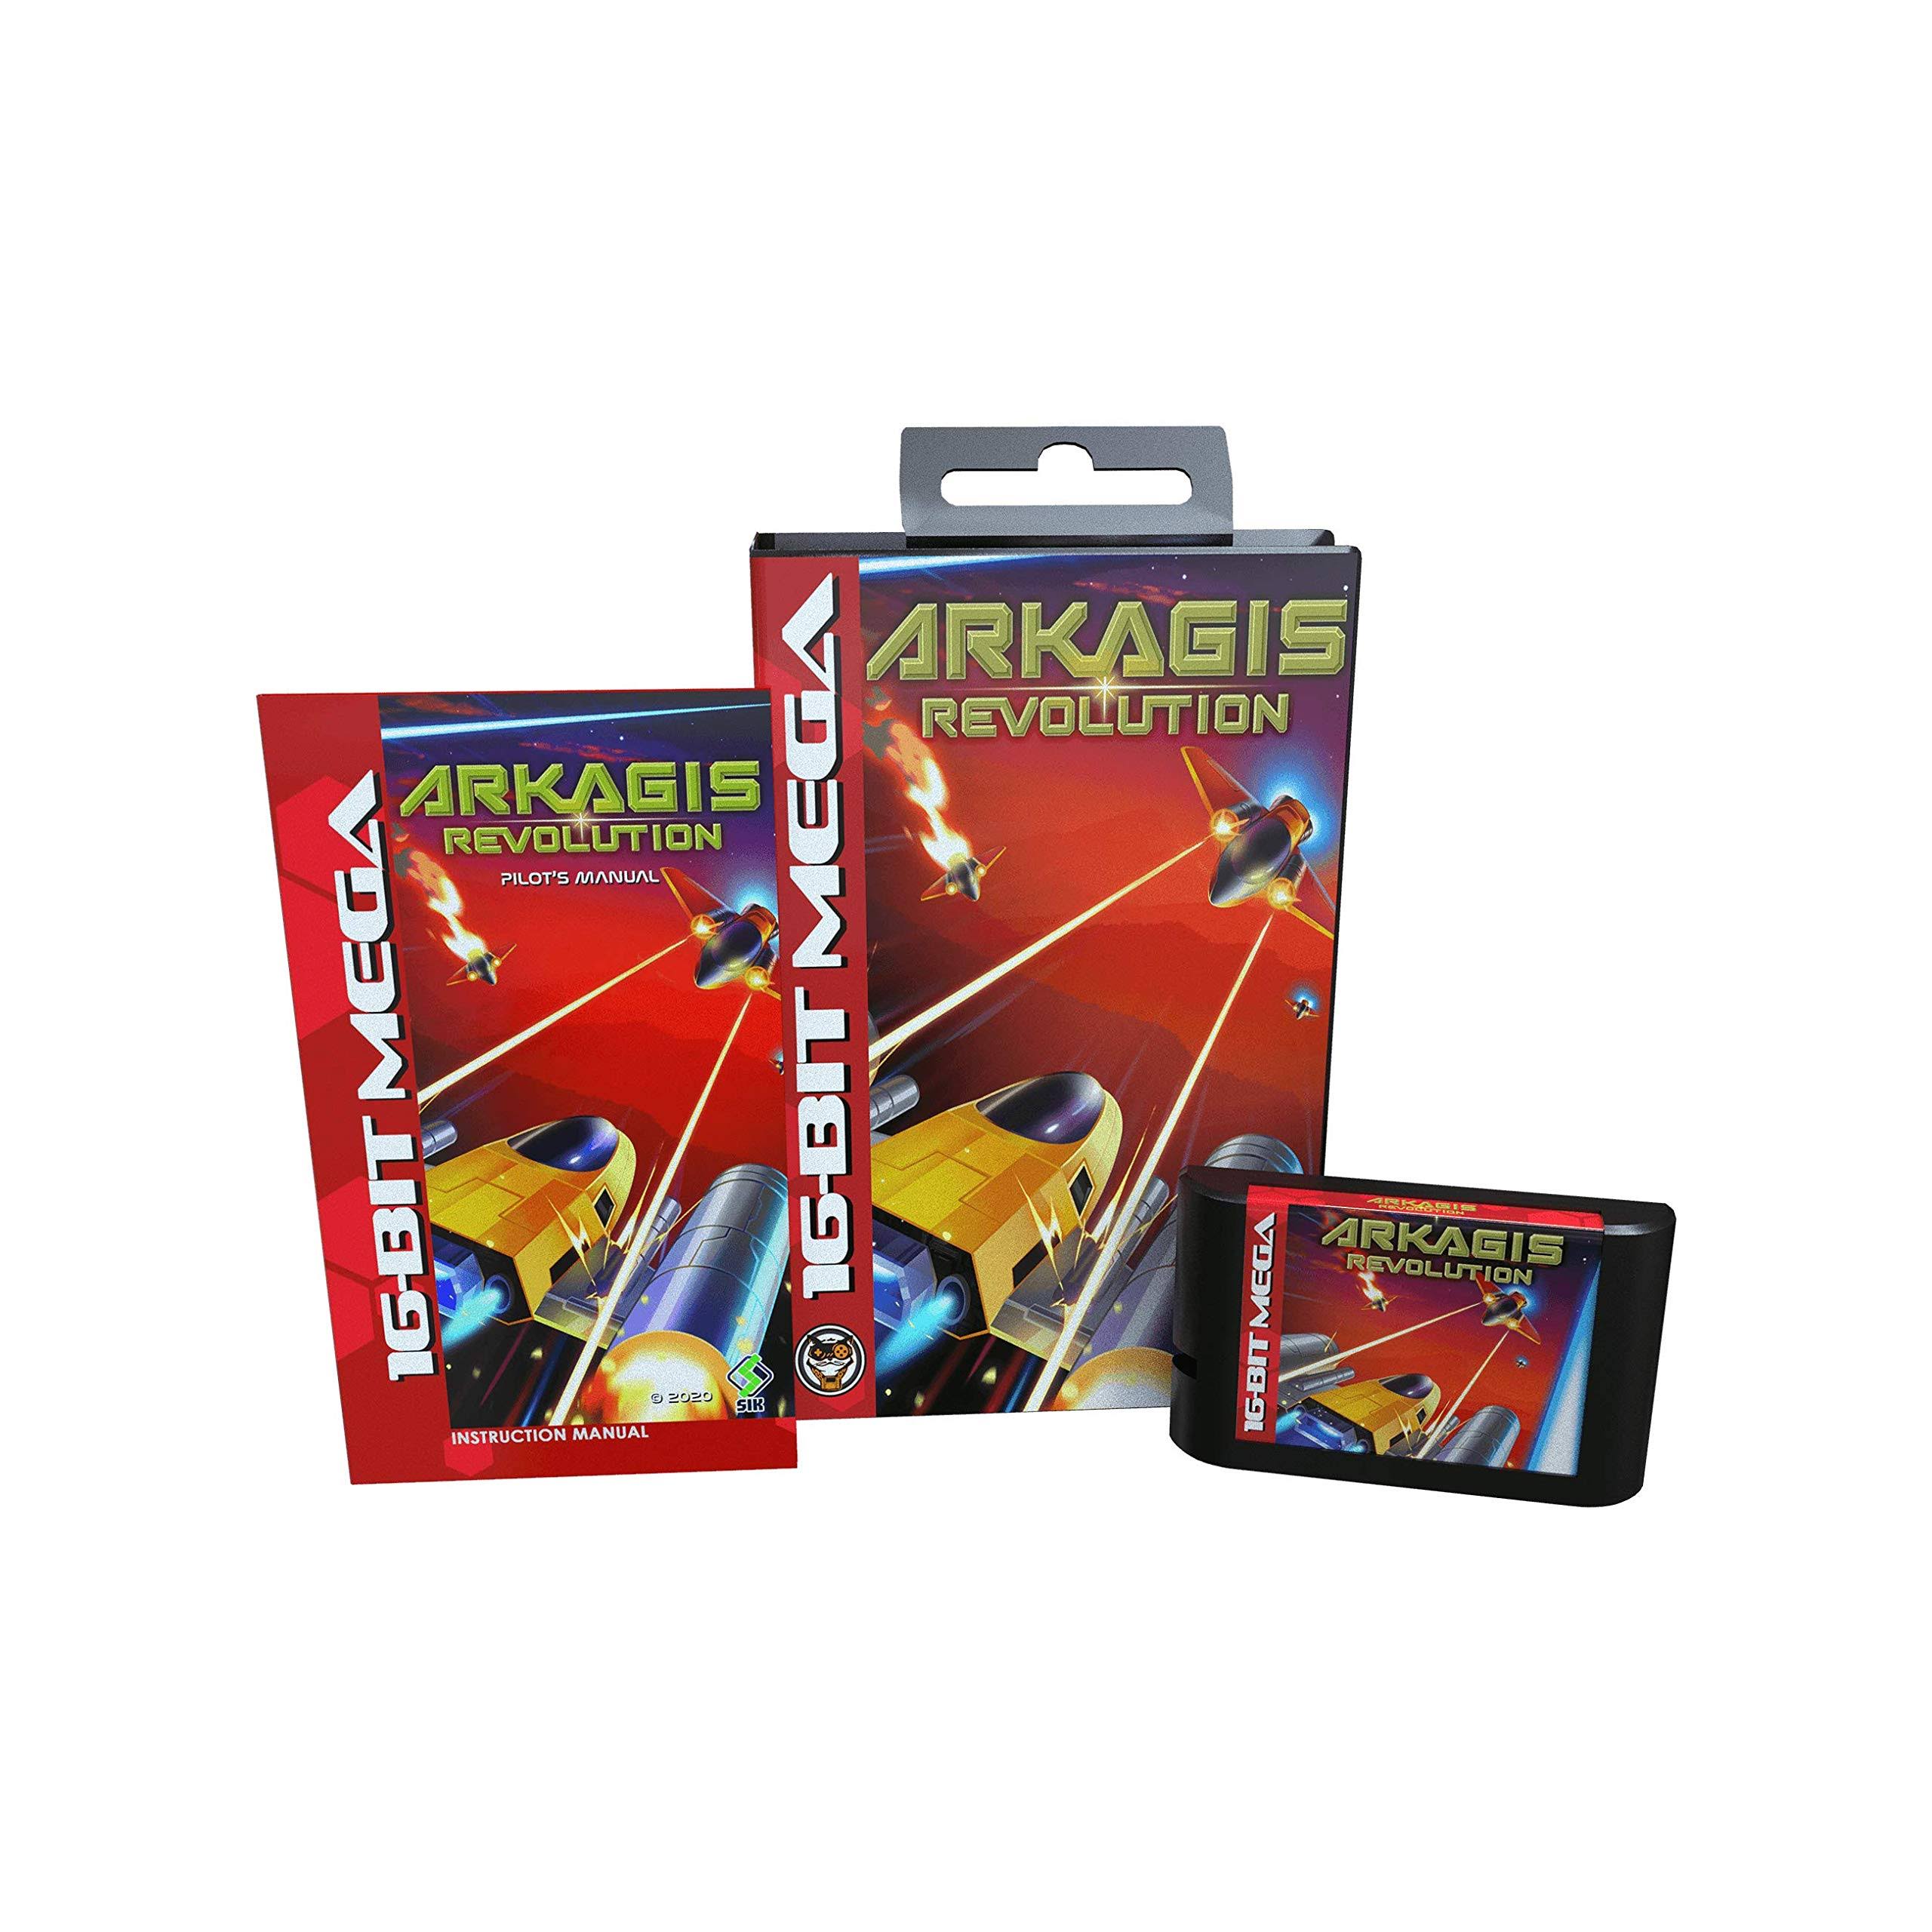 Sega Genesis Arkagis Revolution Video Game Cartridge